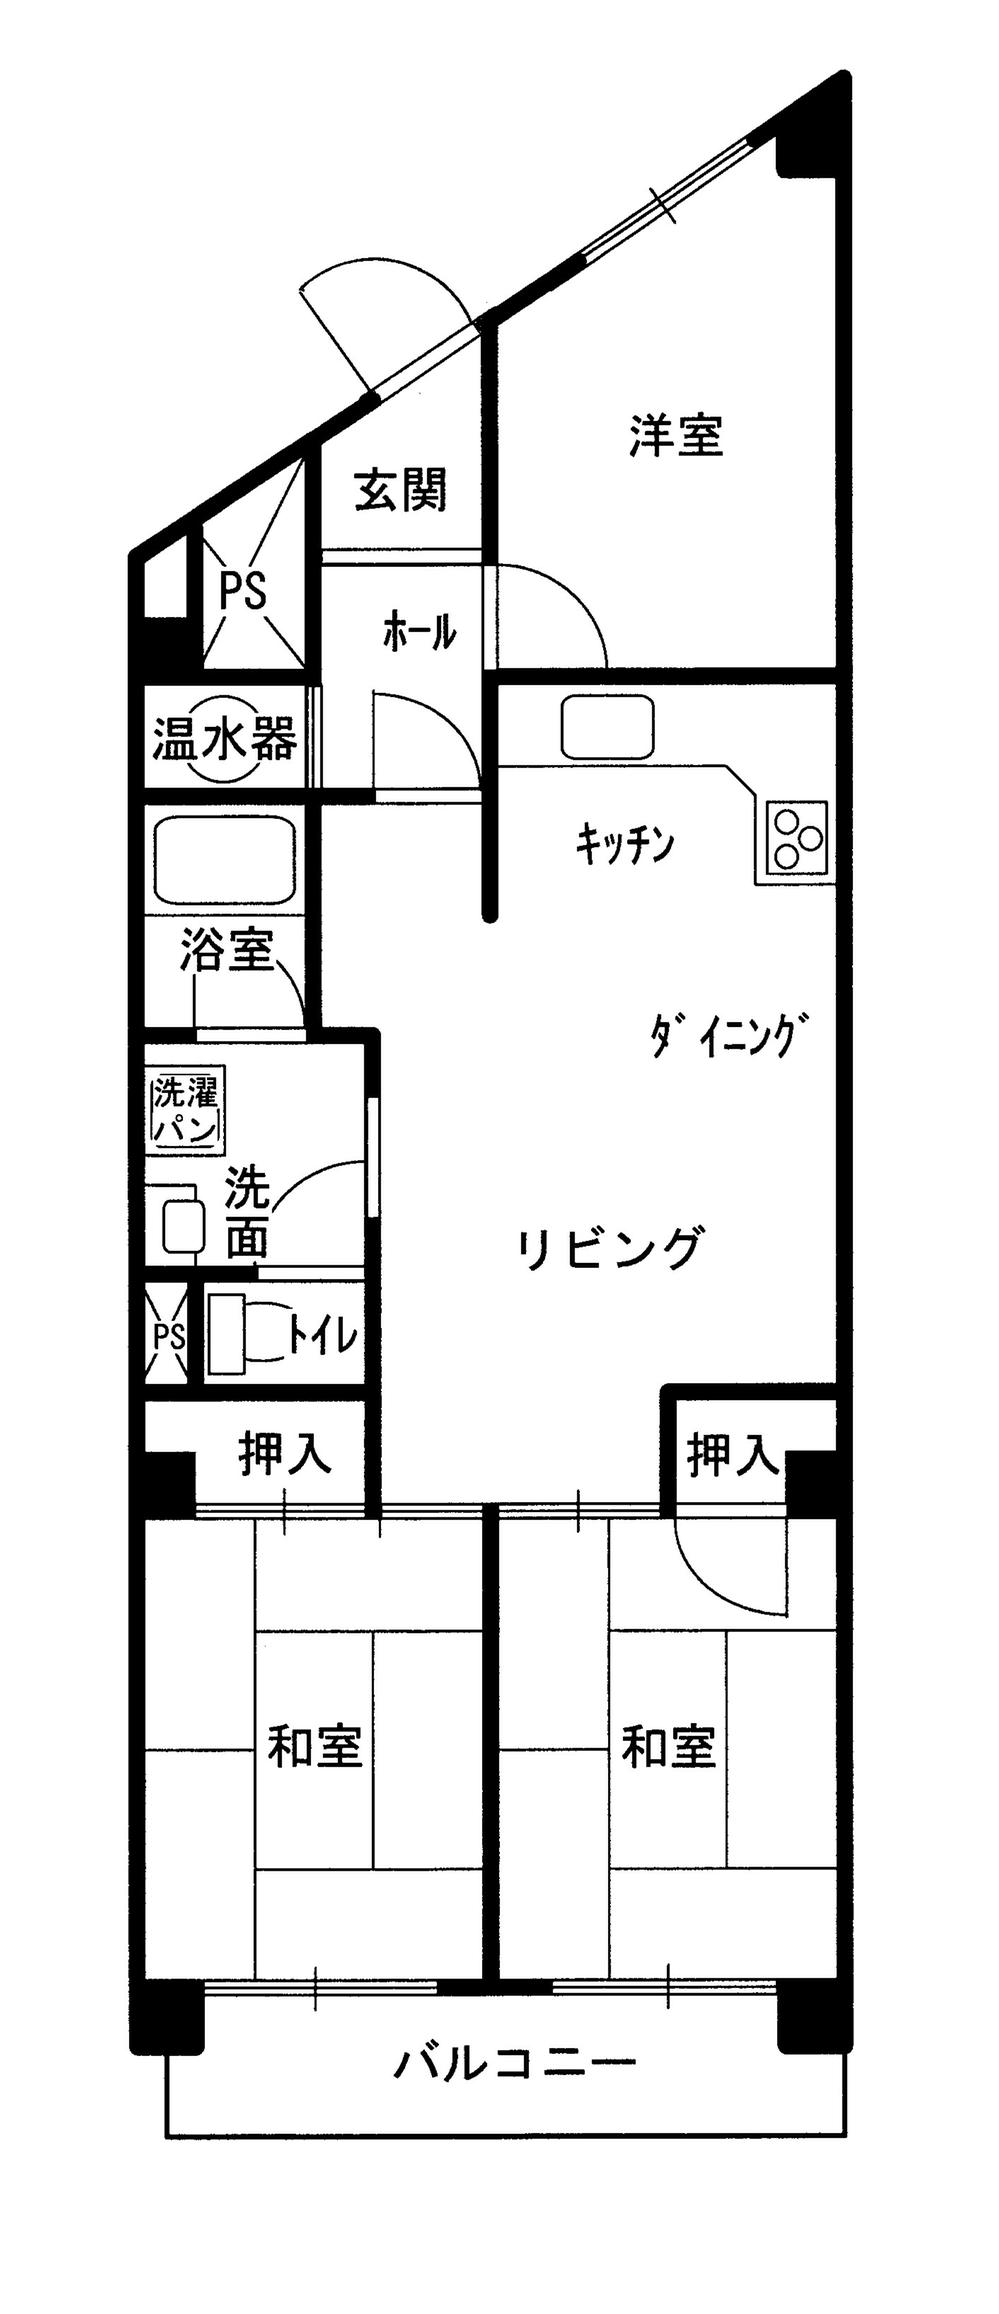 Floor plan. 3LDK, Price 5.8 million yen, Occupied area 66.47 sq m , Balcony area 6 sq m